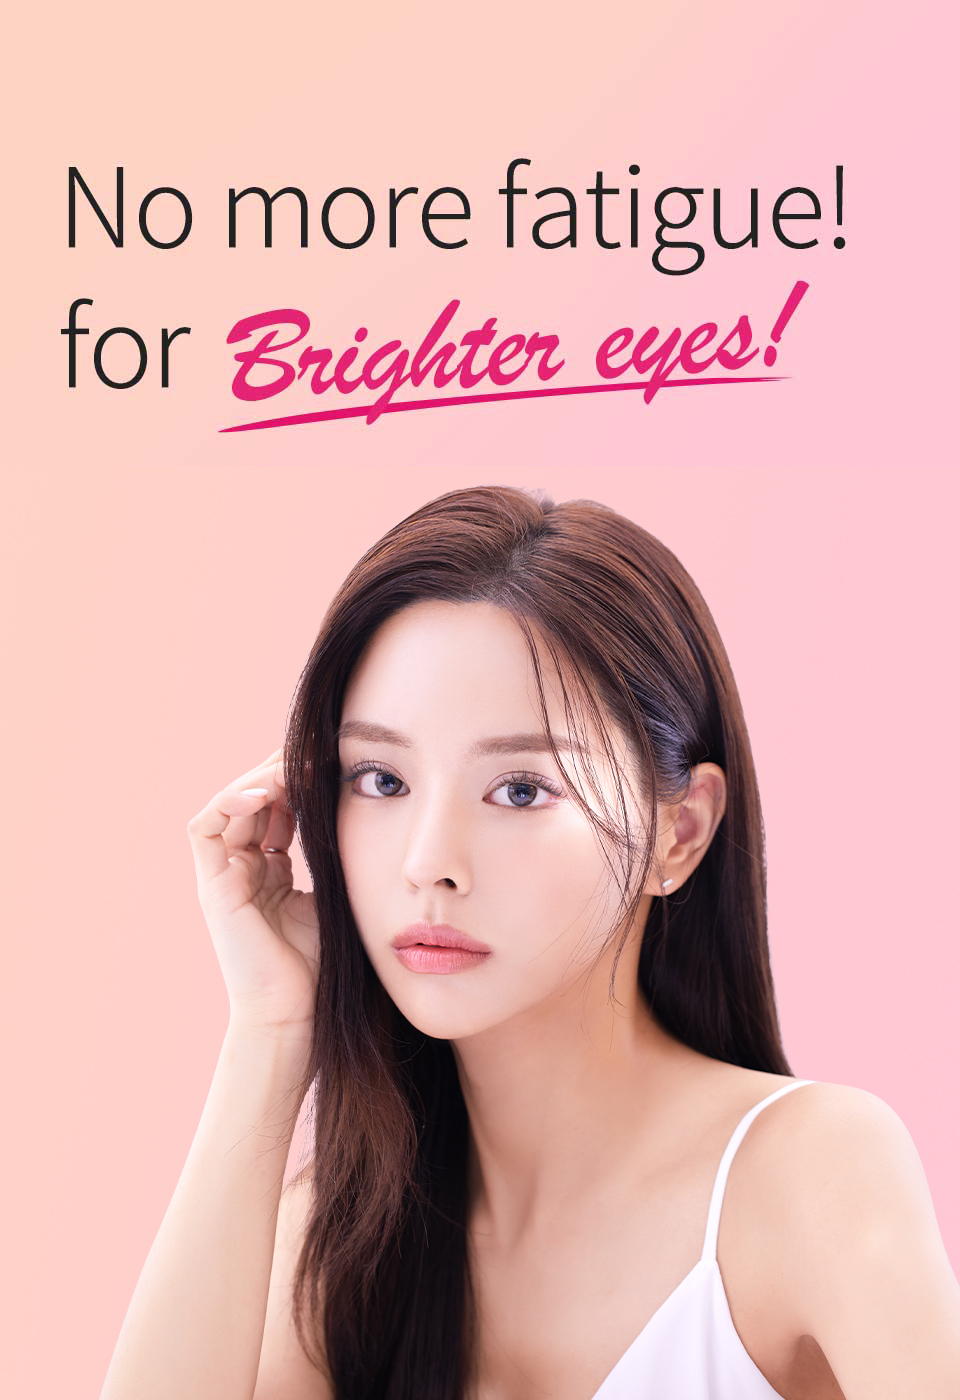 No more fatigue! For Bright eyes!